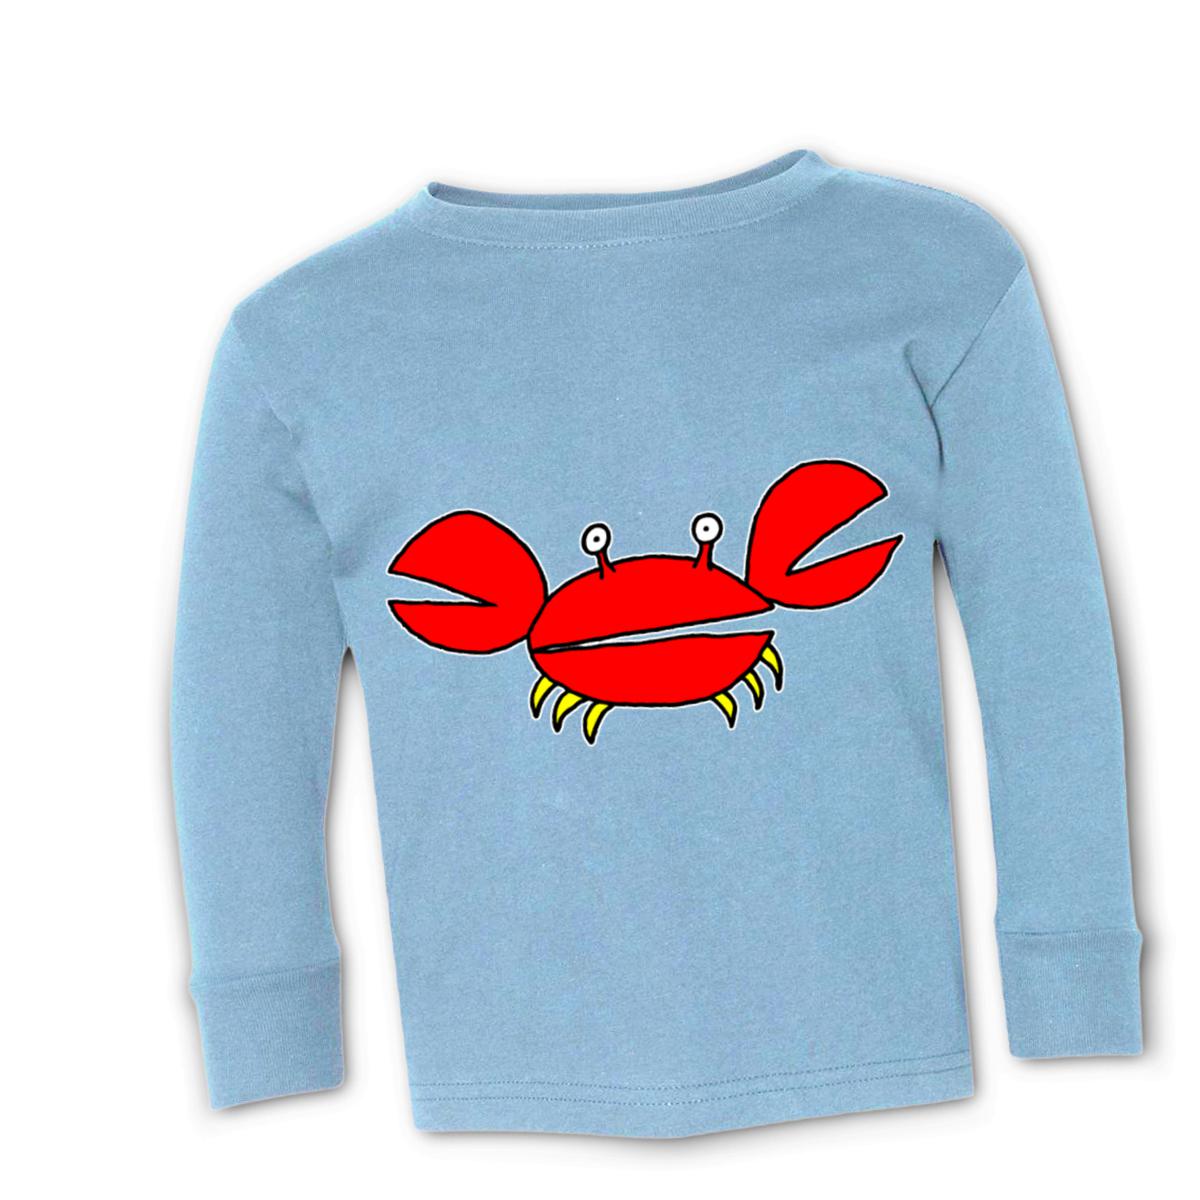 Crab Toddler Long Sleeve Tee 56T light-blue